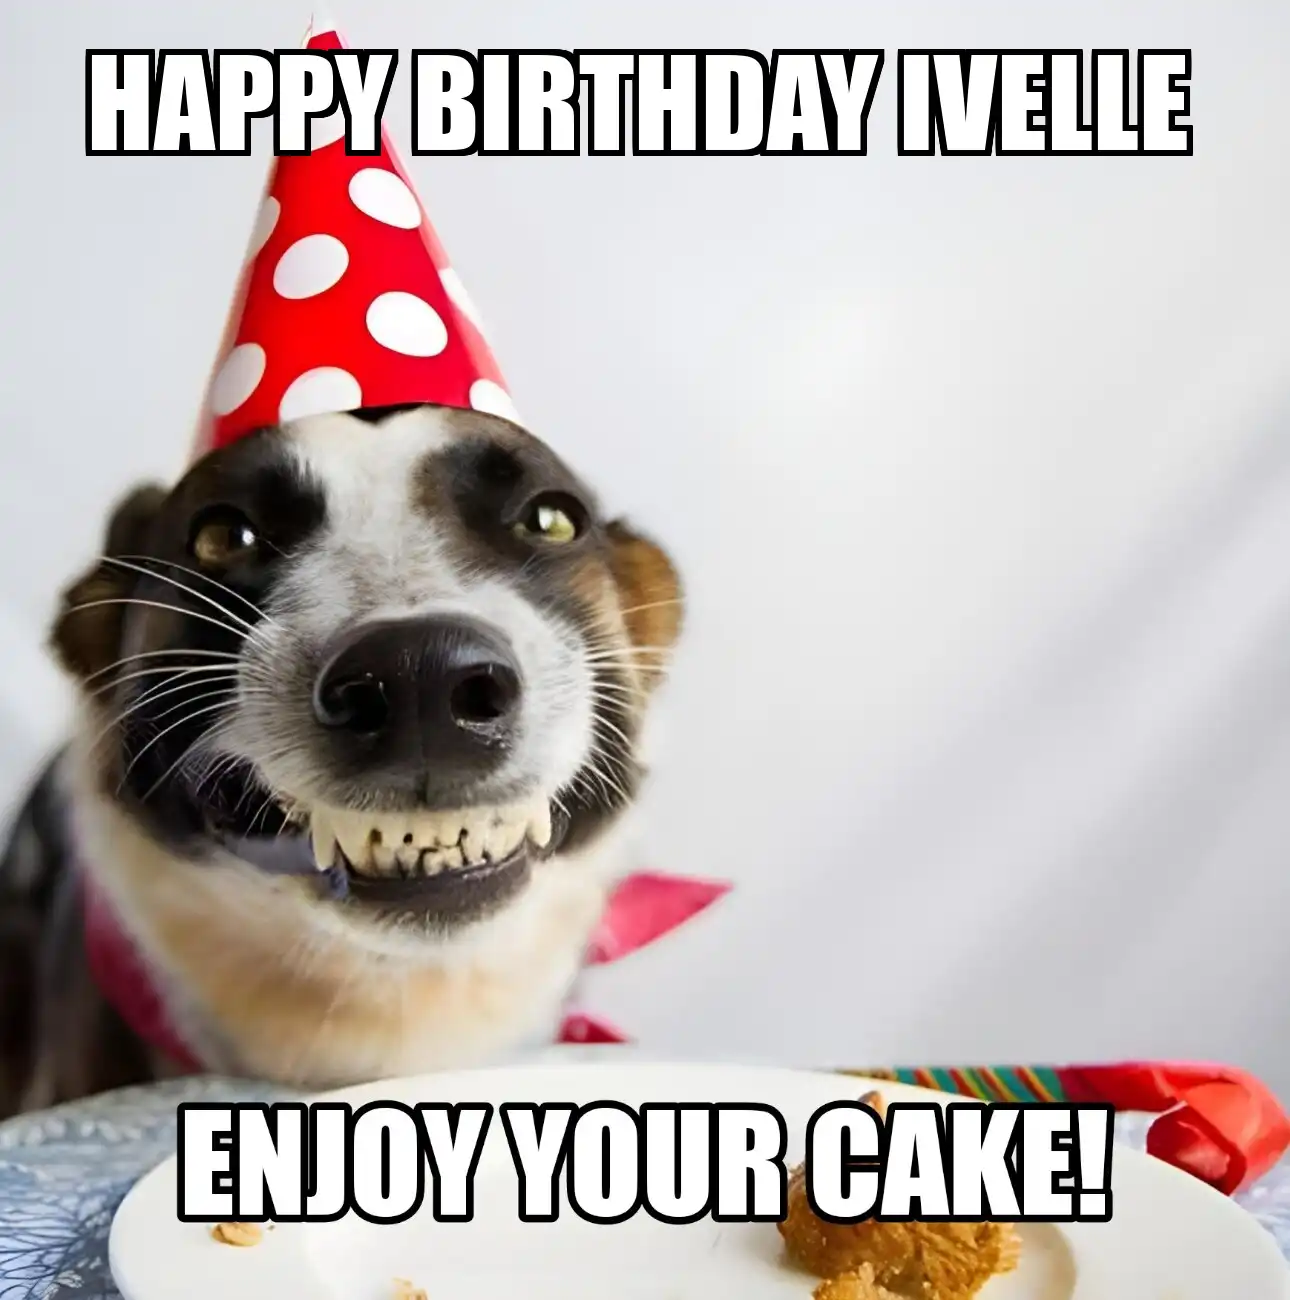 Happy Birthday Ivelle Enjoy Your Cake Dog Meme